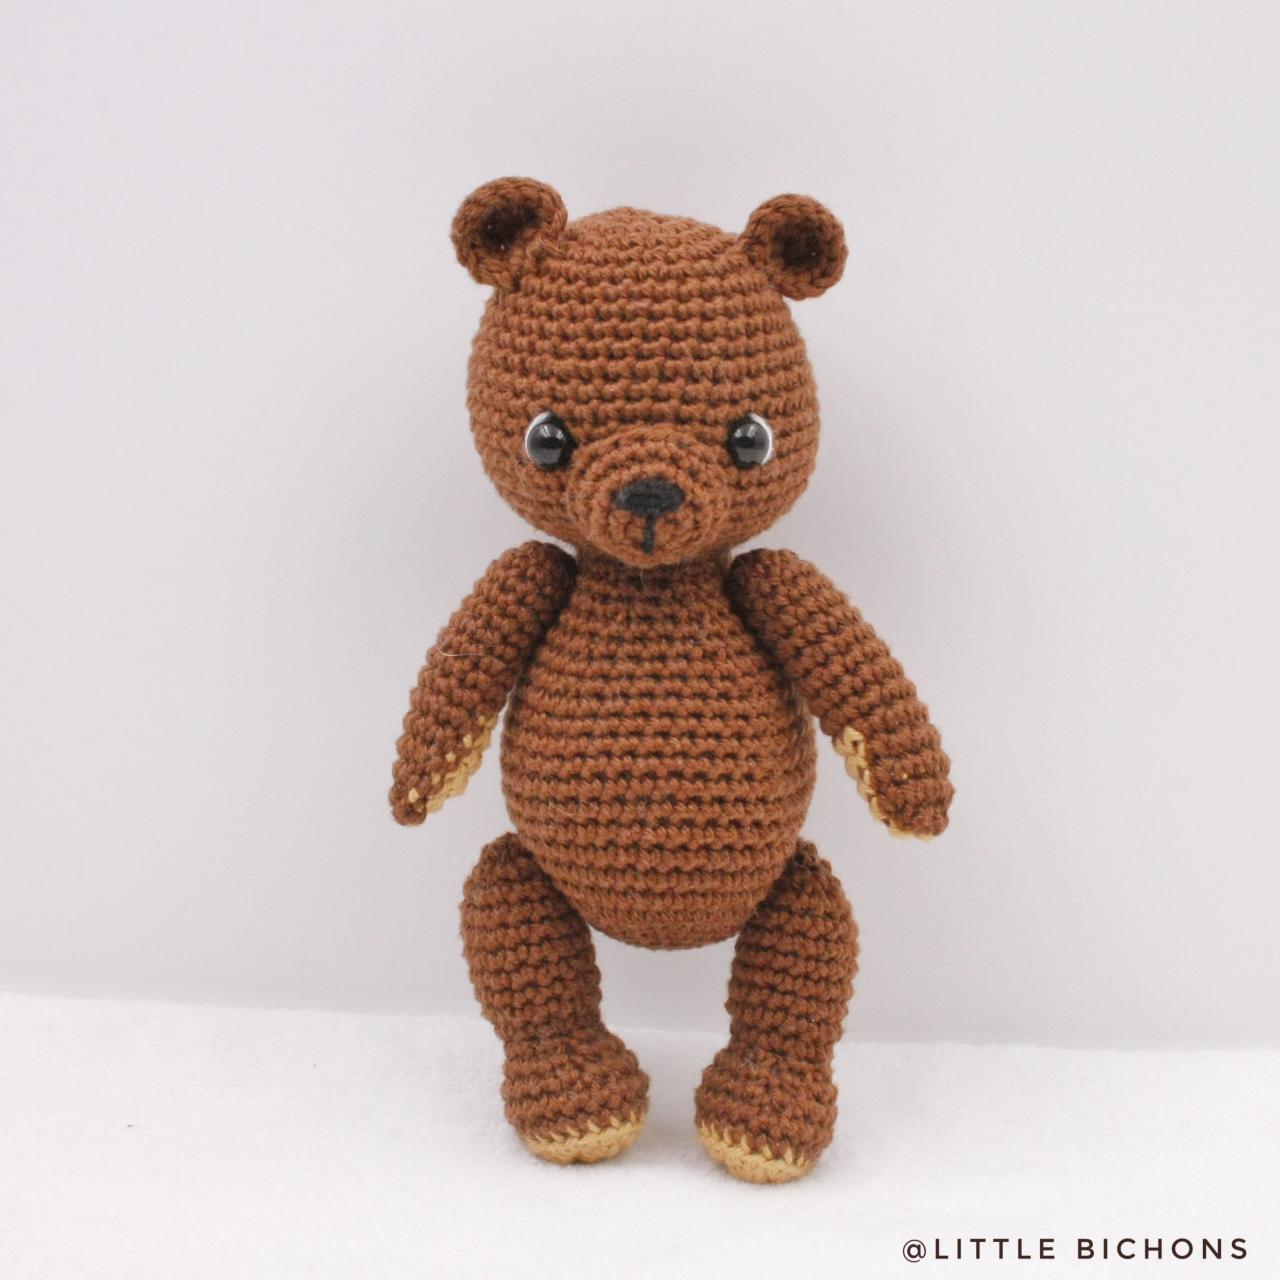 Crochet pattern: Martin the brown bear